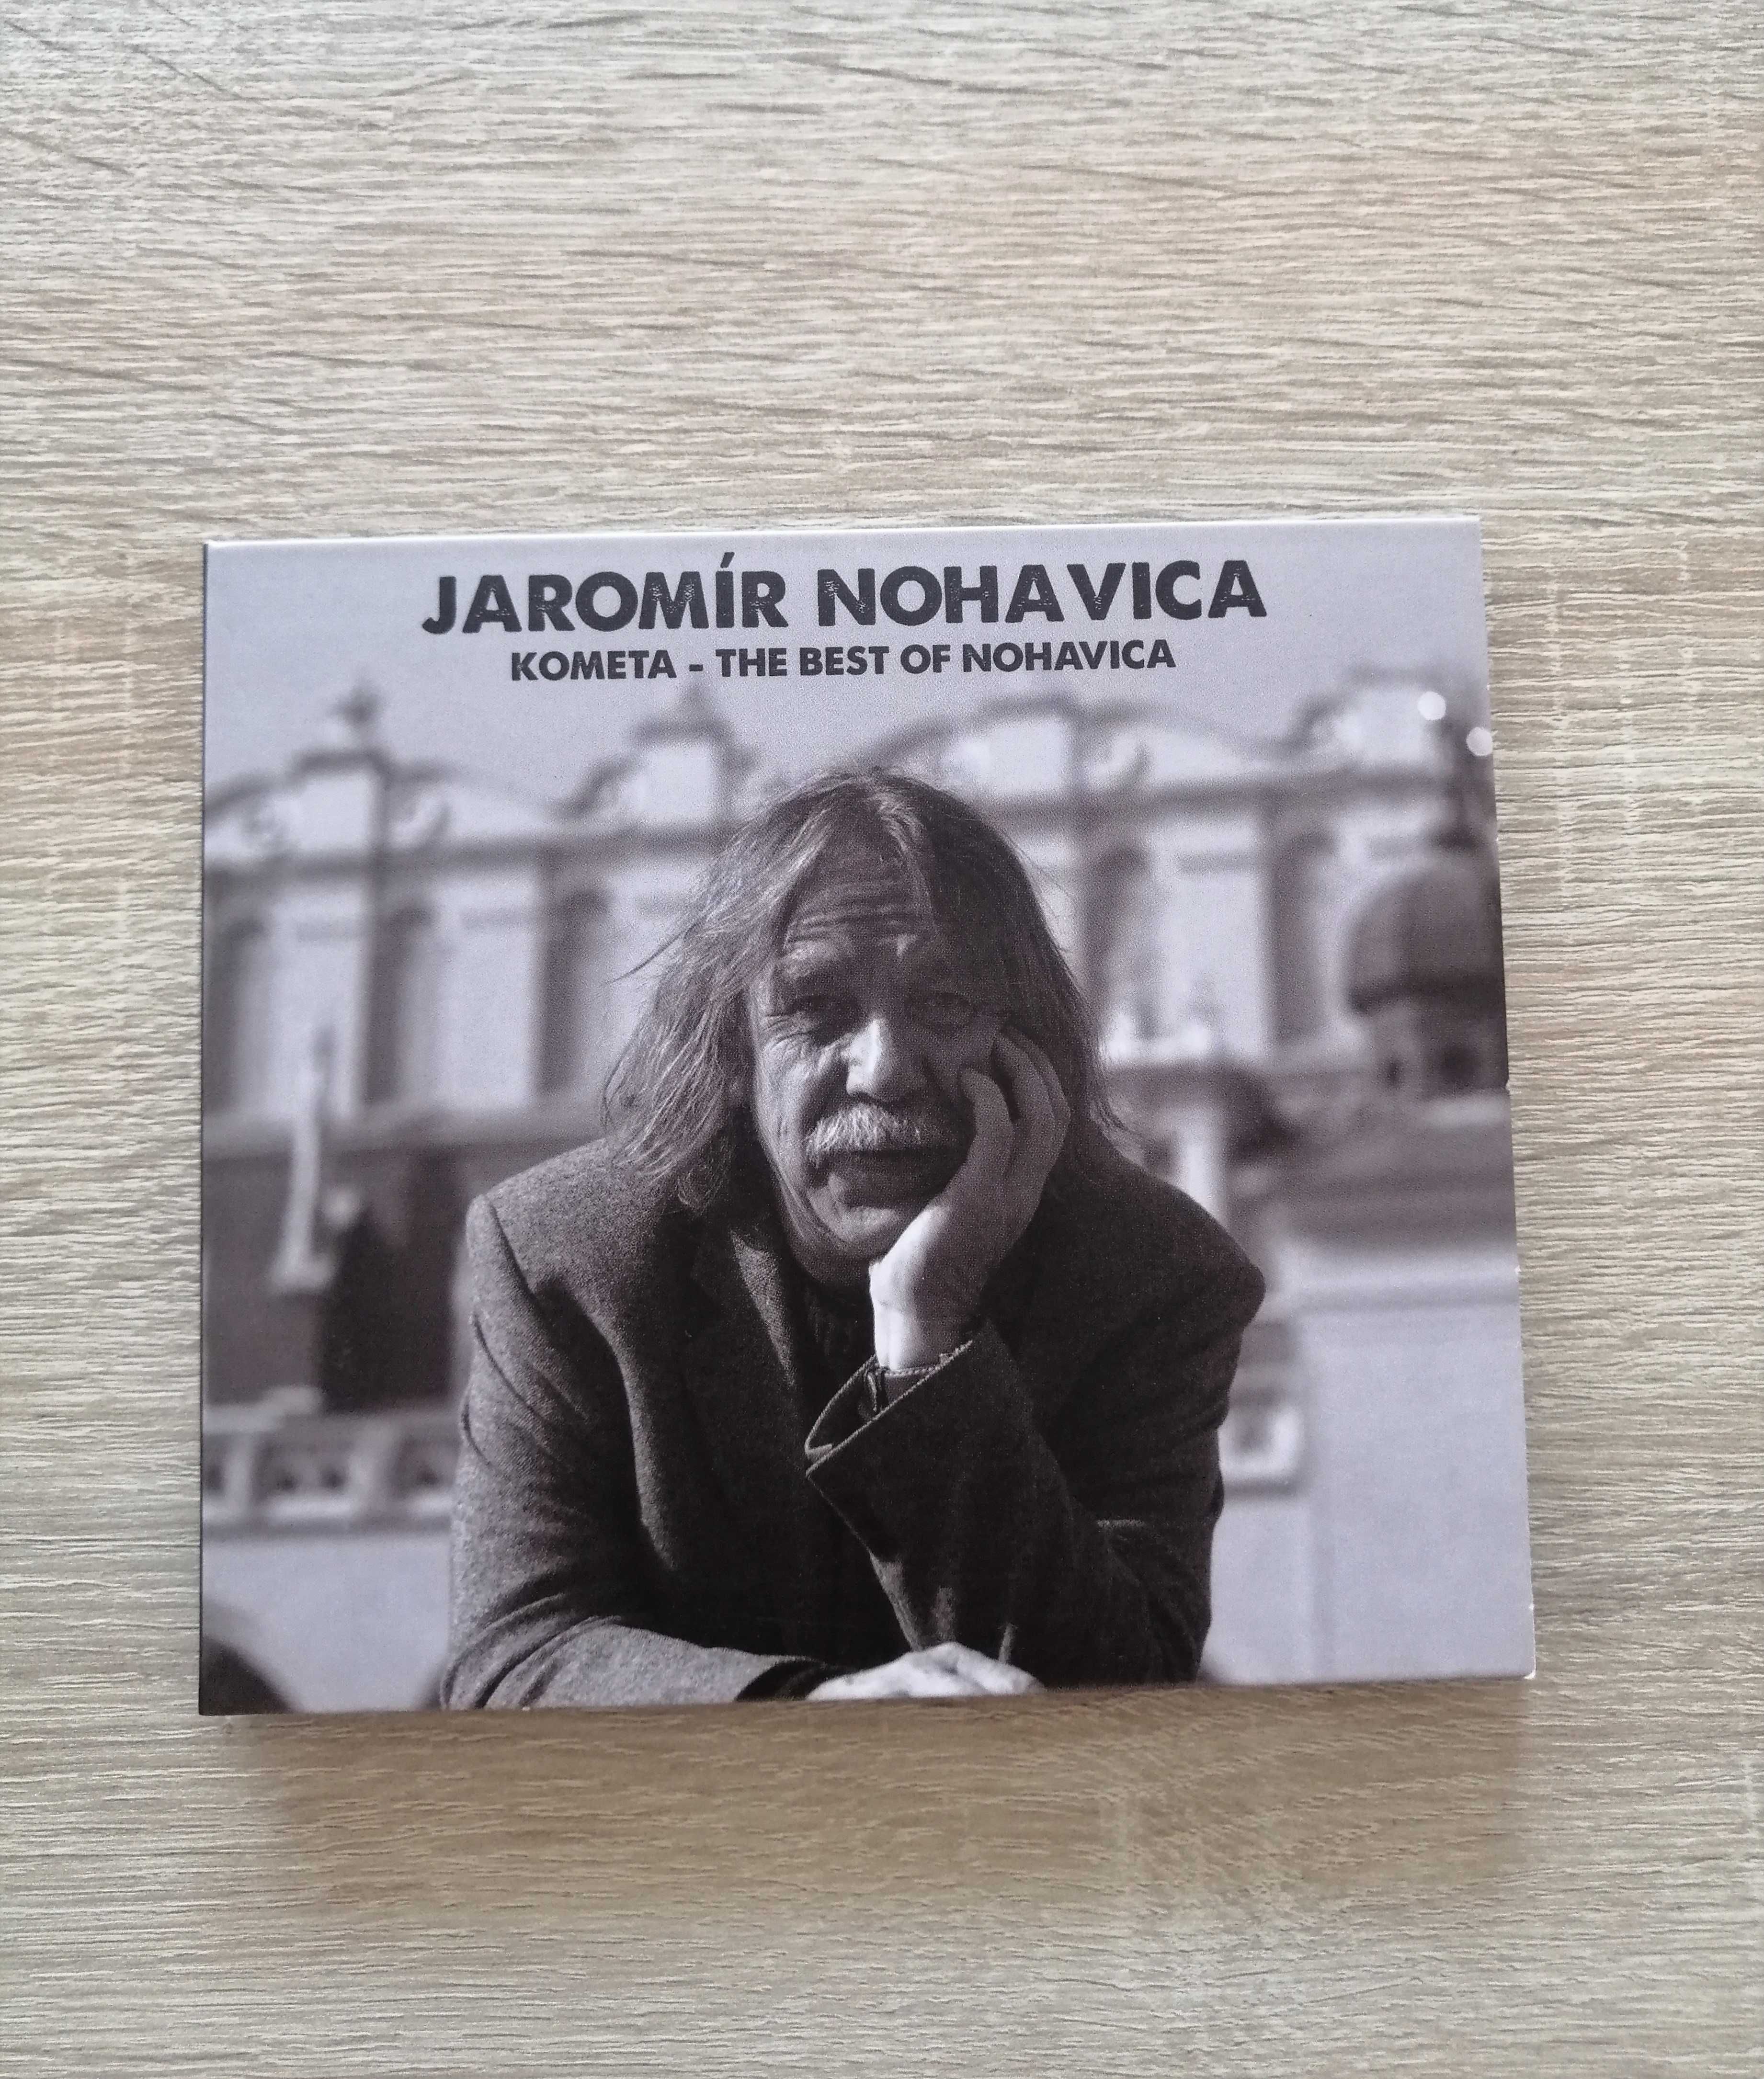 Płyta CD Jaromír Nohavica „Kometa – the best of Nohavica”, stan bdb